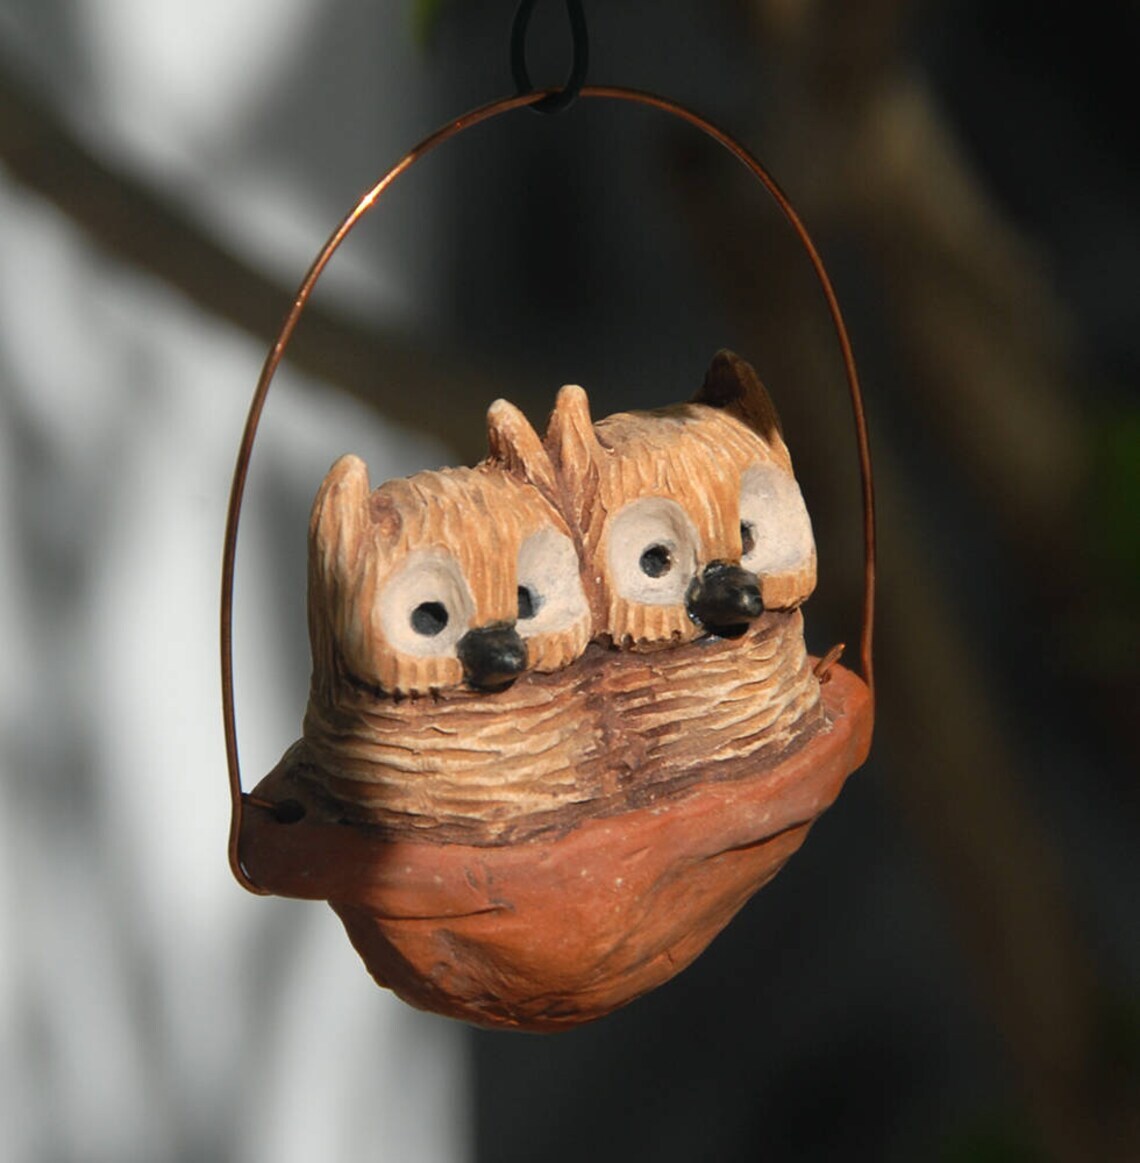 Sleeping baby screech owls ornament